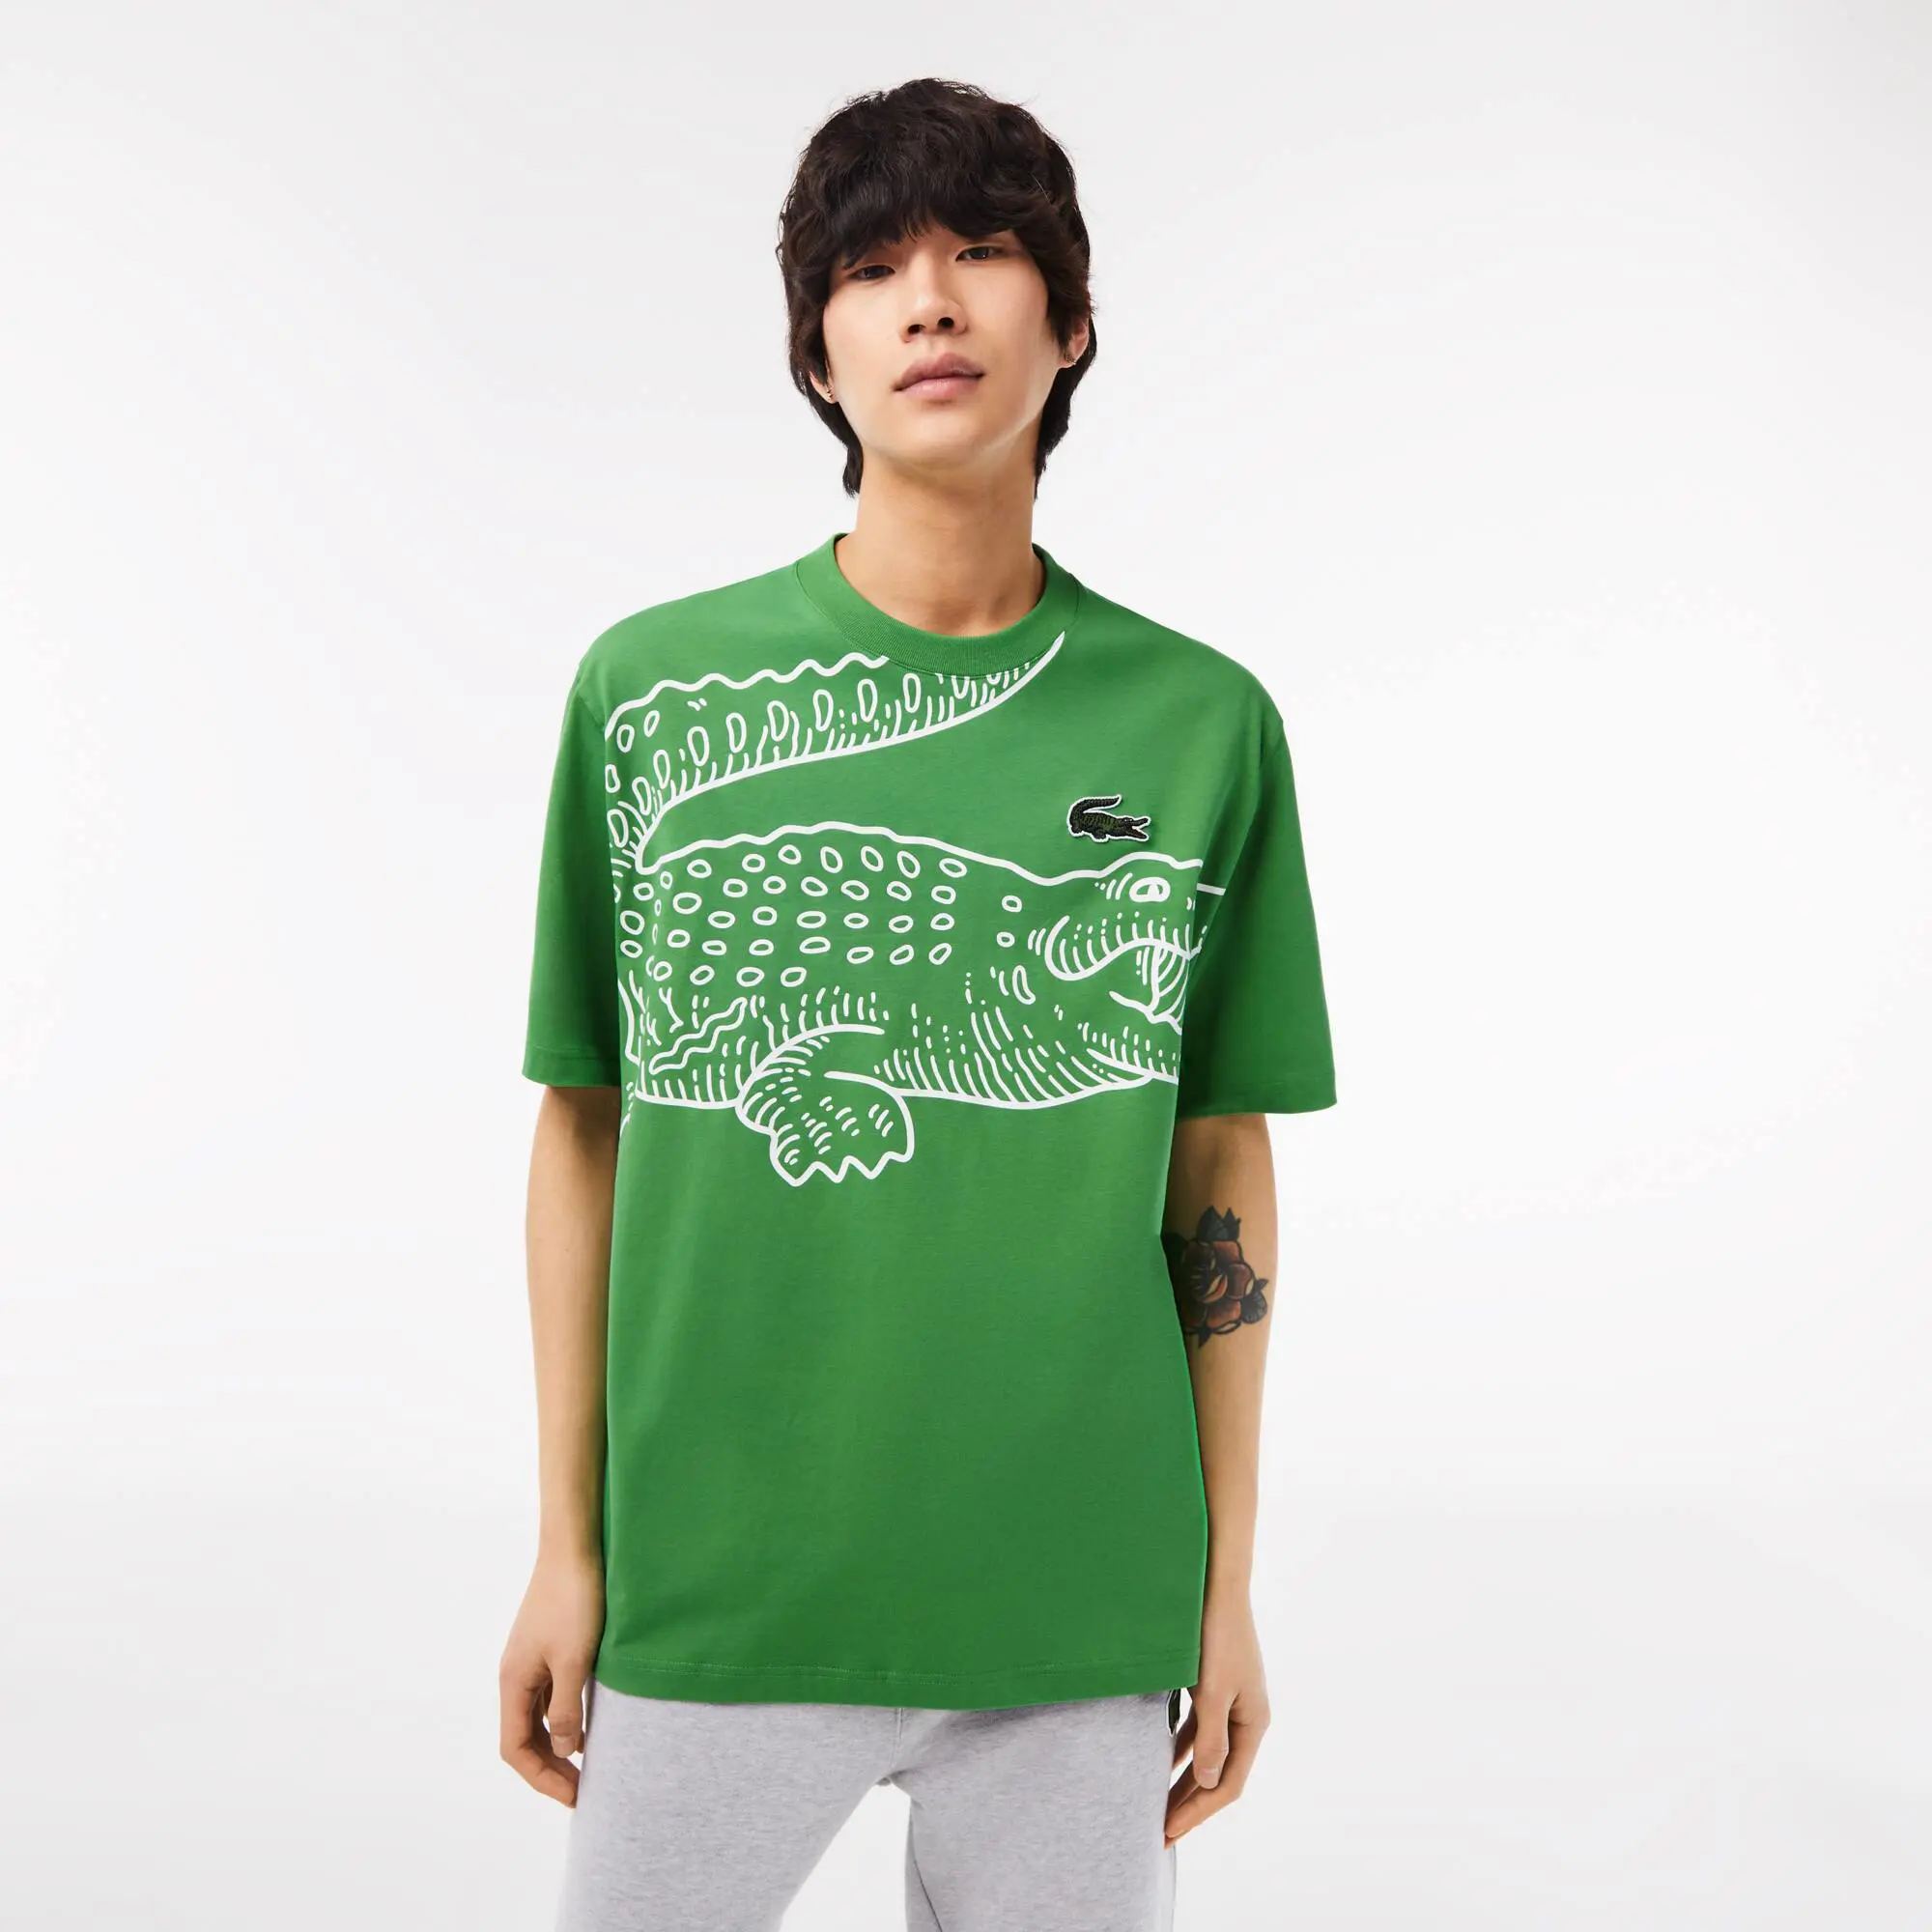 Lacoste T-shirt com estampado de crocodilo loose fit com decote redondo Lacoste para homem. 1